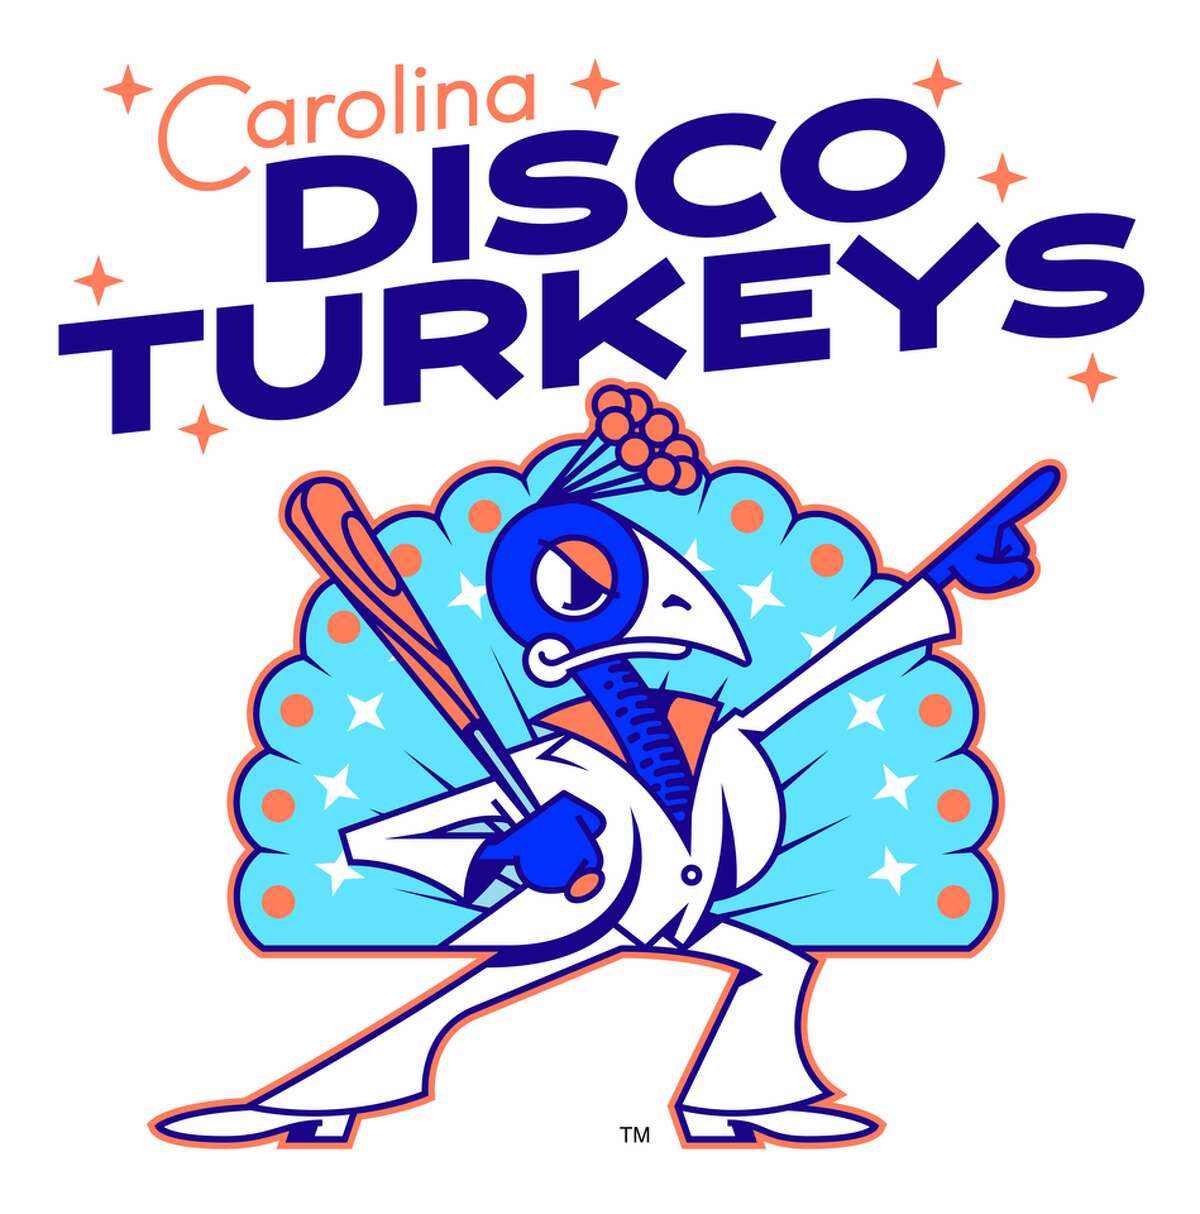 The Carolina Disco Turkeys are an armature baseball team in Winston-Salem, North Carolina 